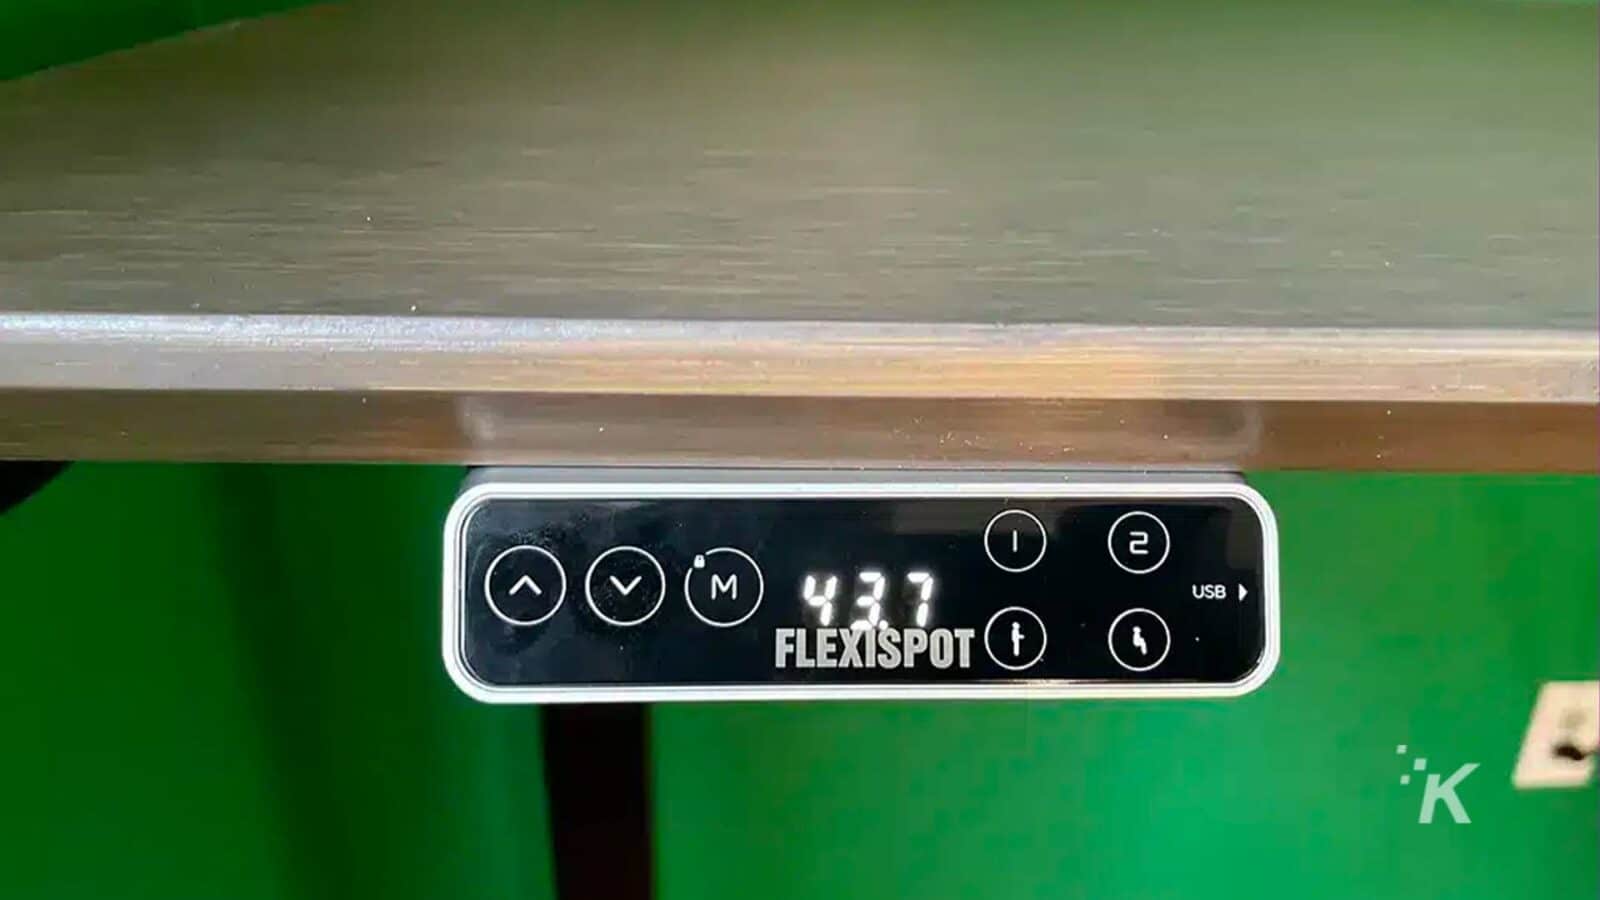 La imagen muestra un cable USB conectado a un dispositivo FlexiSpot. Texto completo: - VM) 437 2 1 USB de FLEXISPOT K